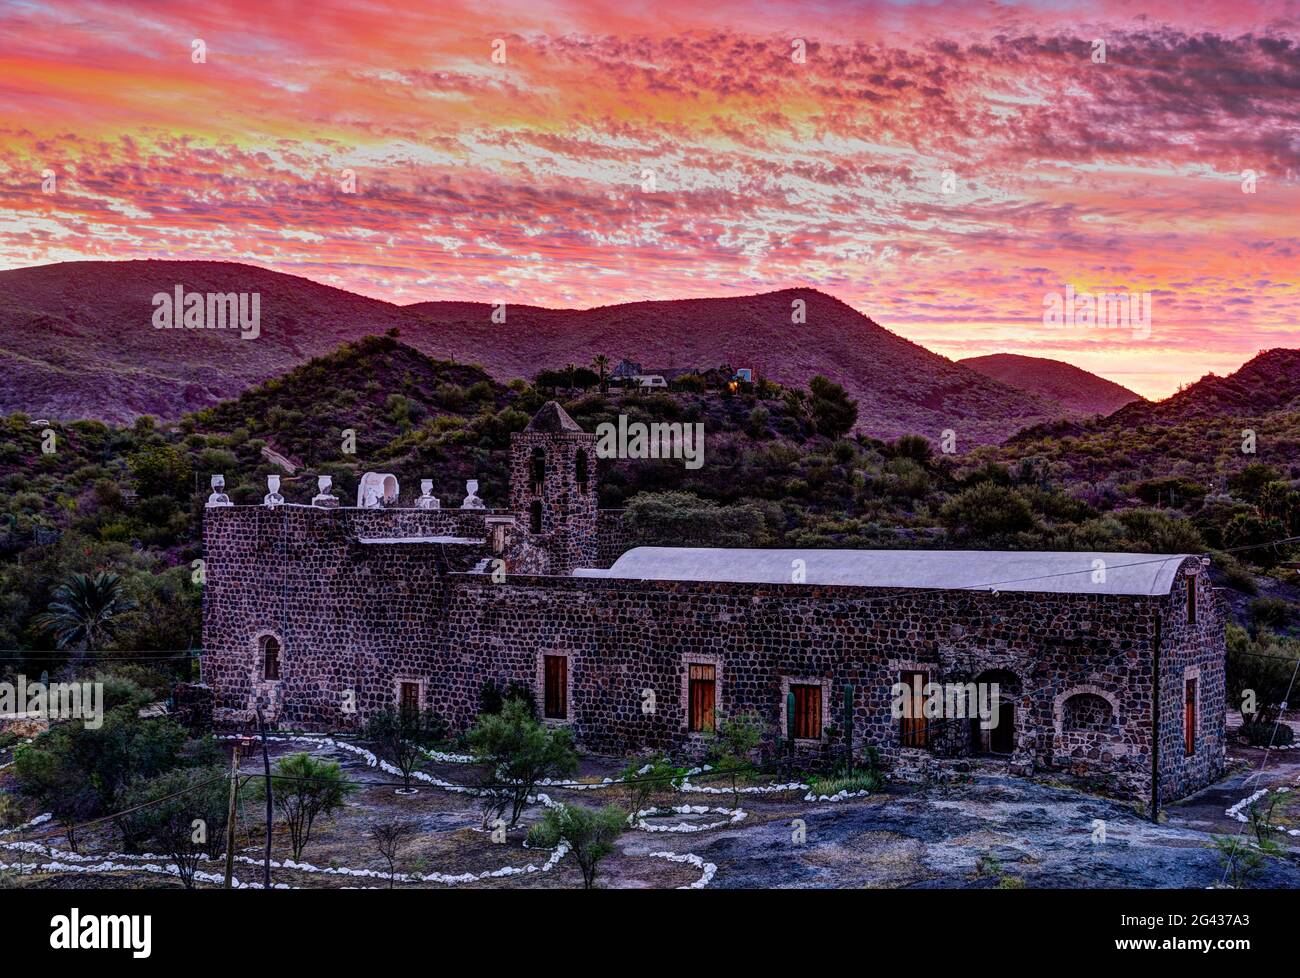 Overview of building of Mission Santa Rosalia de Mulege at sunset, Mulege, Baja California Sur, Mexico Stock Photo